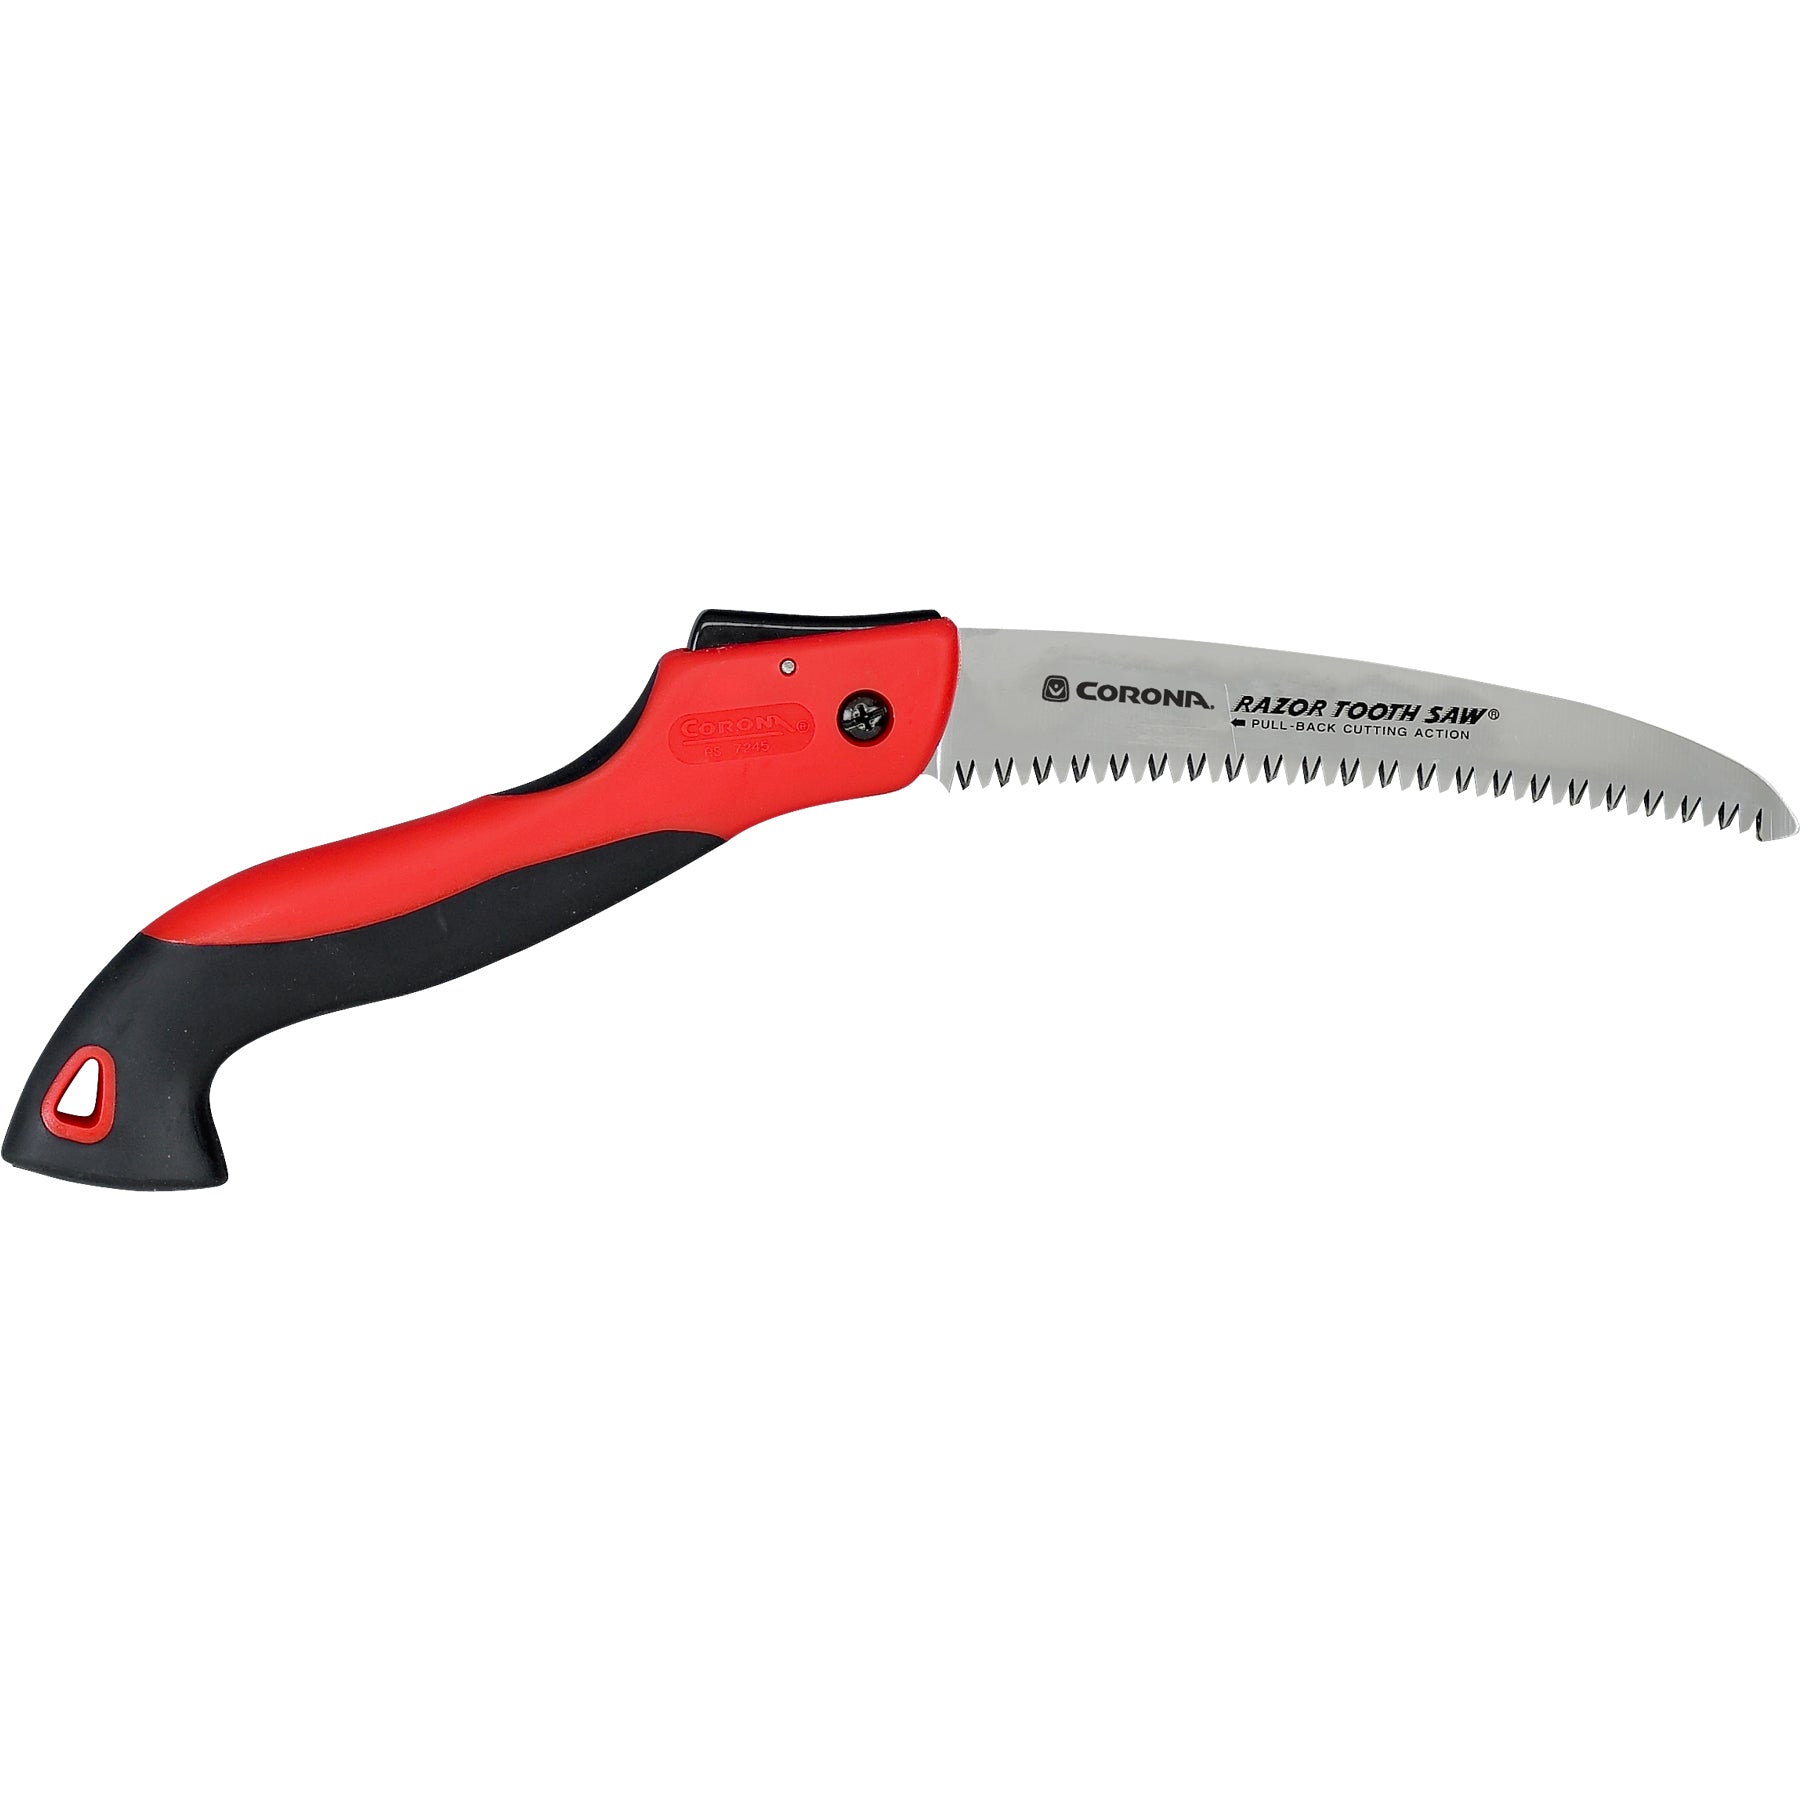 RazorTOOTH Saw® Folding Pruning Saw, 7 in. Blade